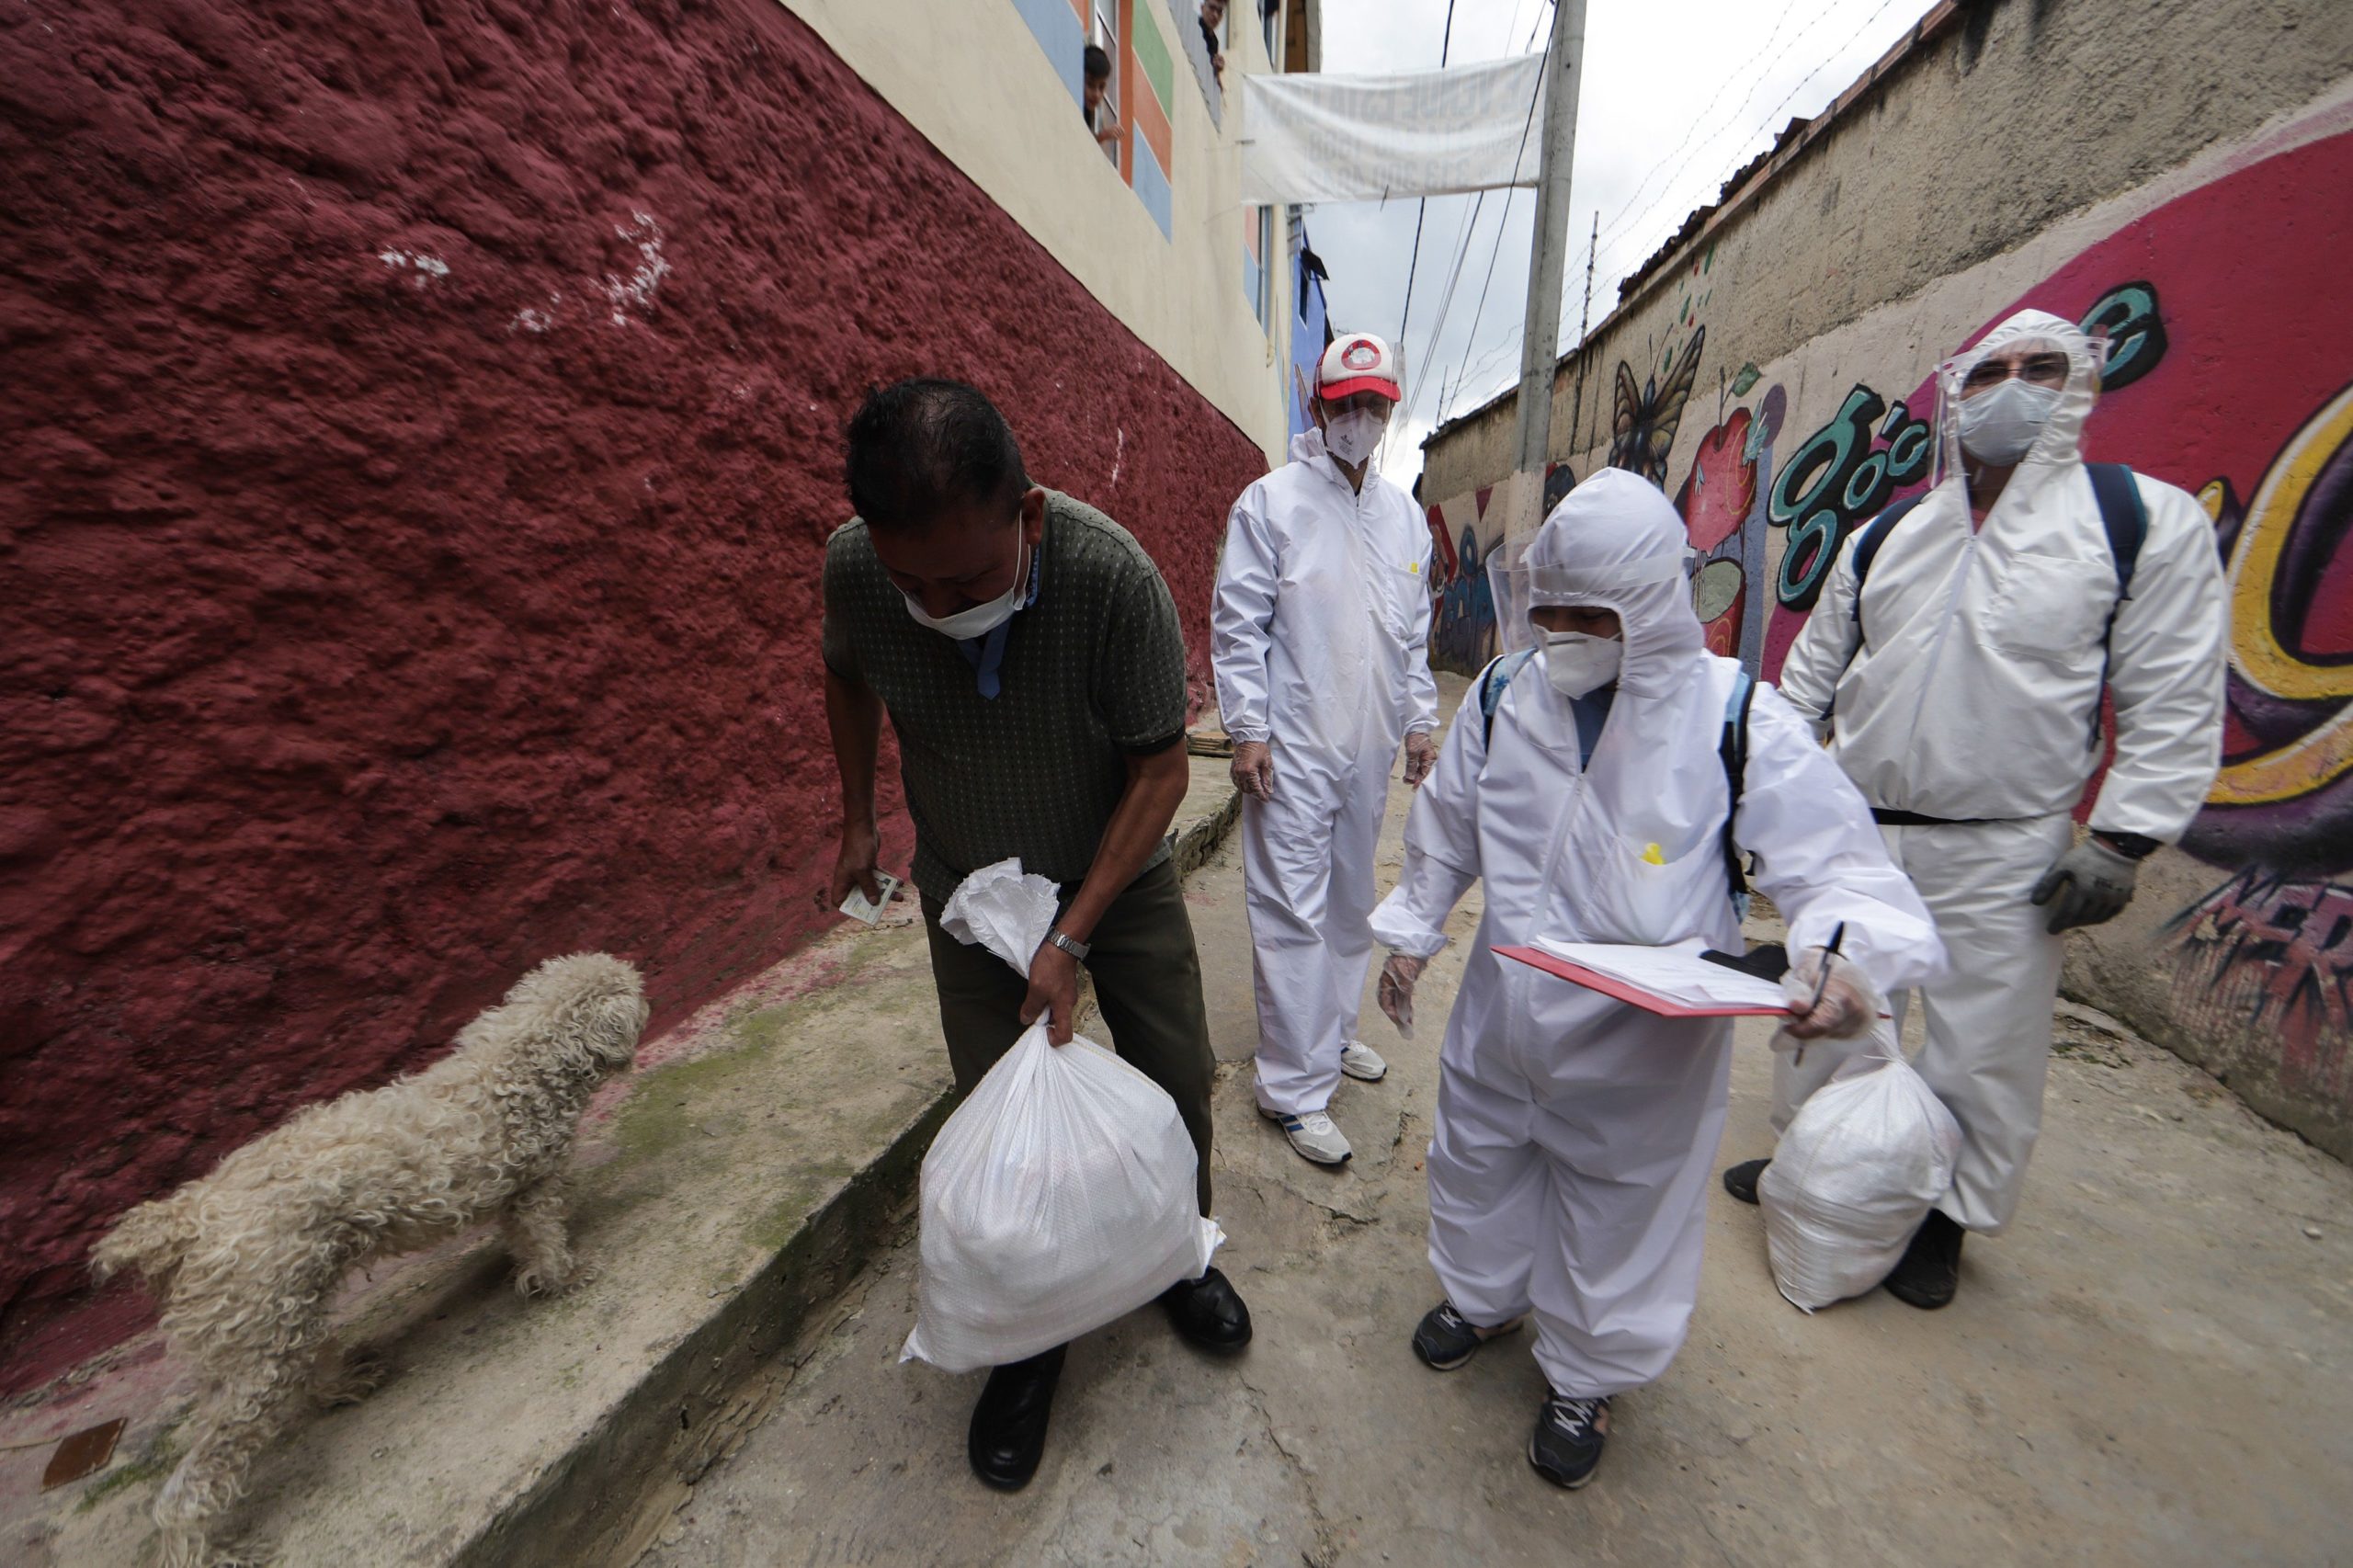 28/06/2020 Reparto de insumos en Bogotá durante la epidemia de coronavirus
POLITICA SUDAMÉRICA COLOMBIA
- / XINHUA NEWS / CONTACTOPHOTO
